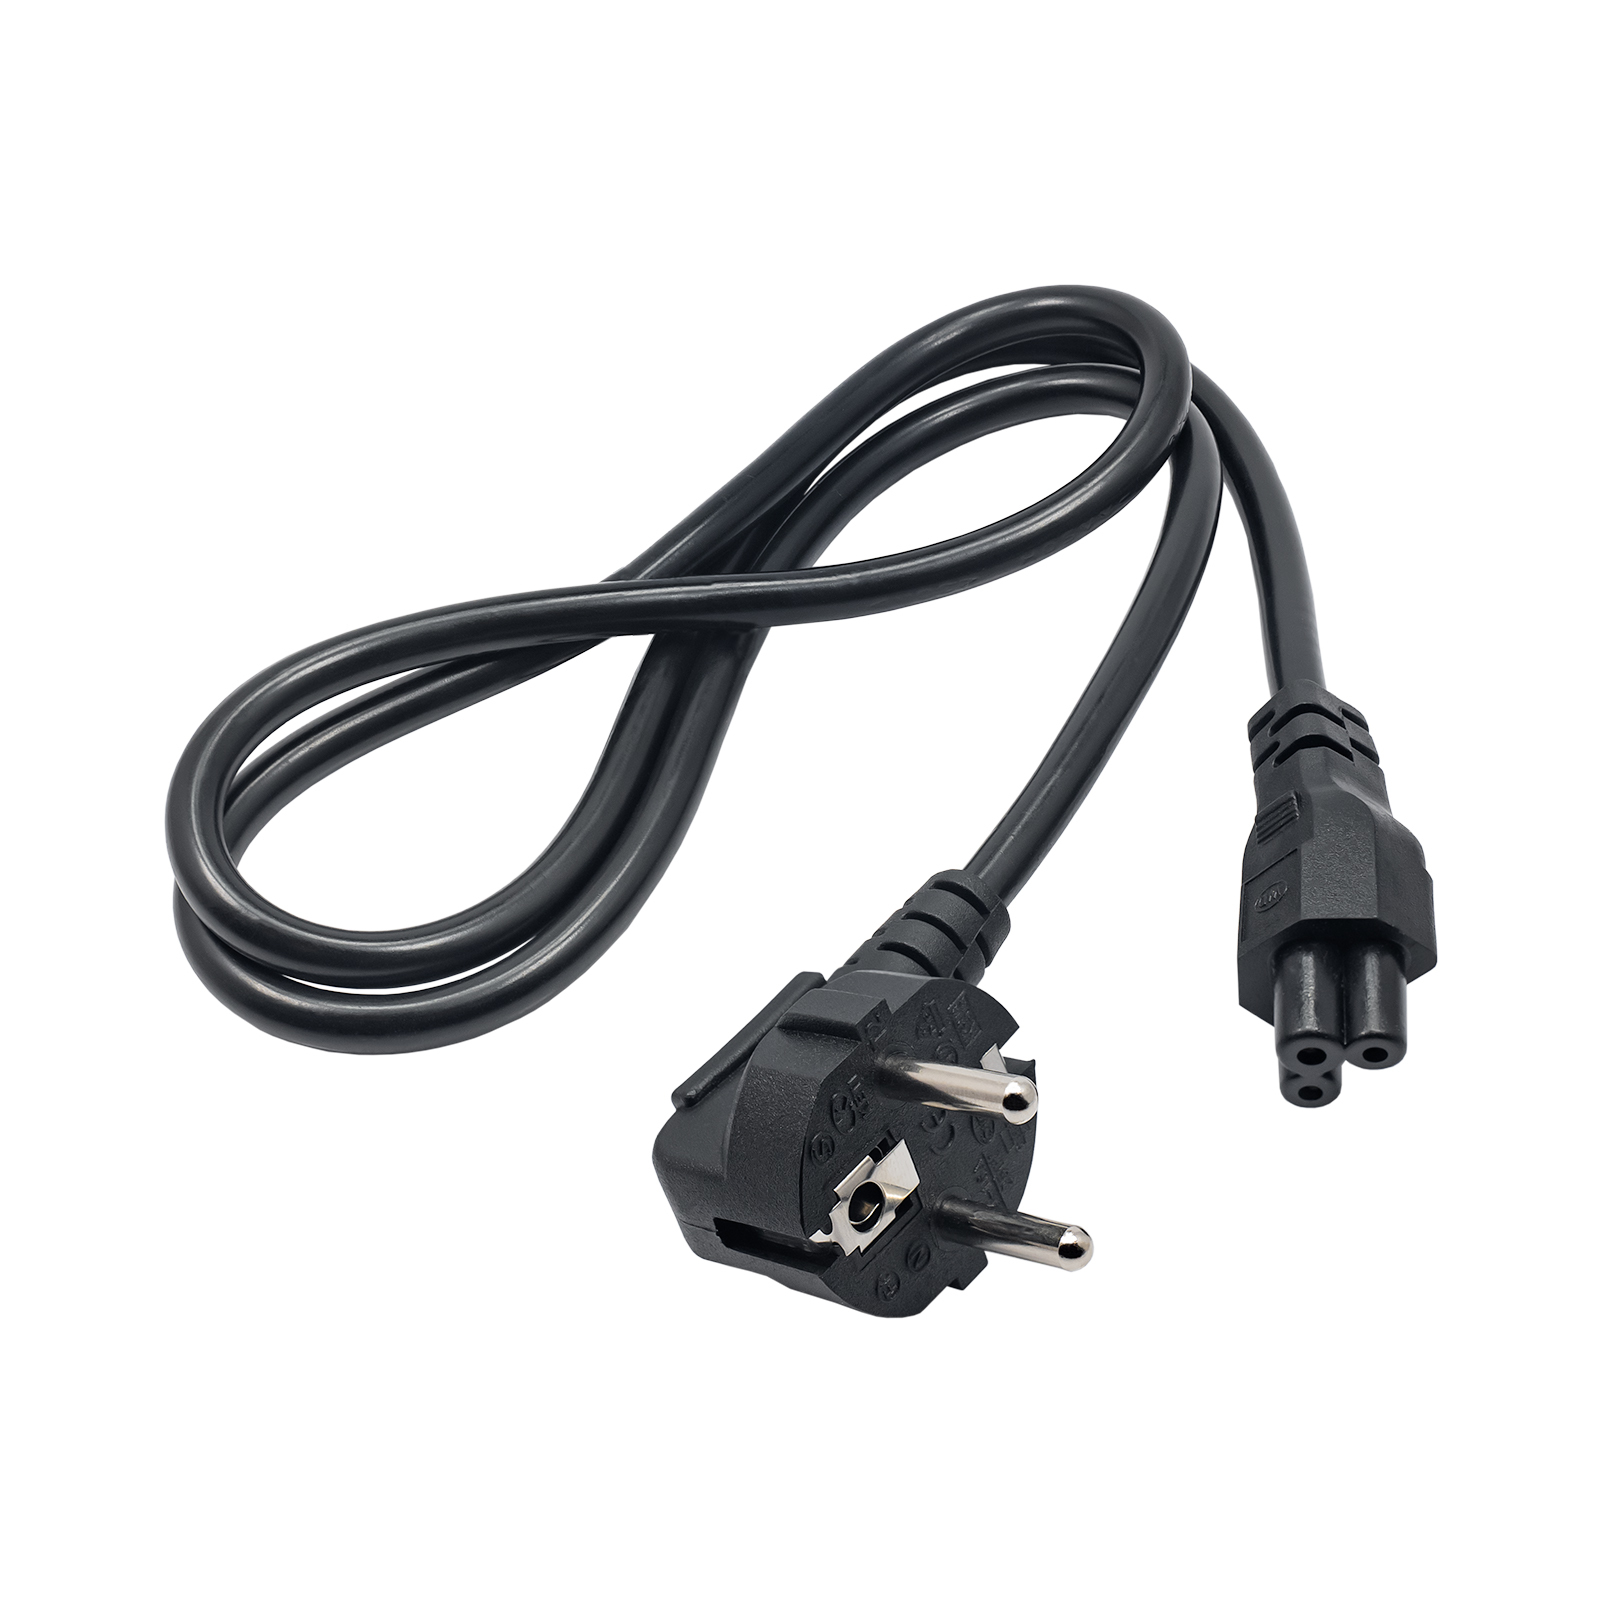 Akyga Cable power AK-NB-08A Hybrid standard C/E/F CEE 7/7 - Euro 3-Pin C5 IEC - Kabel - 1 - Kabel - 1 m